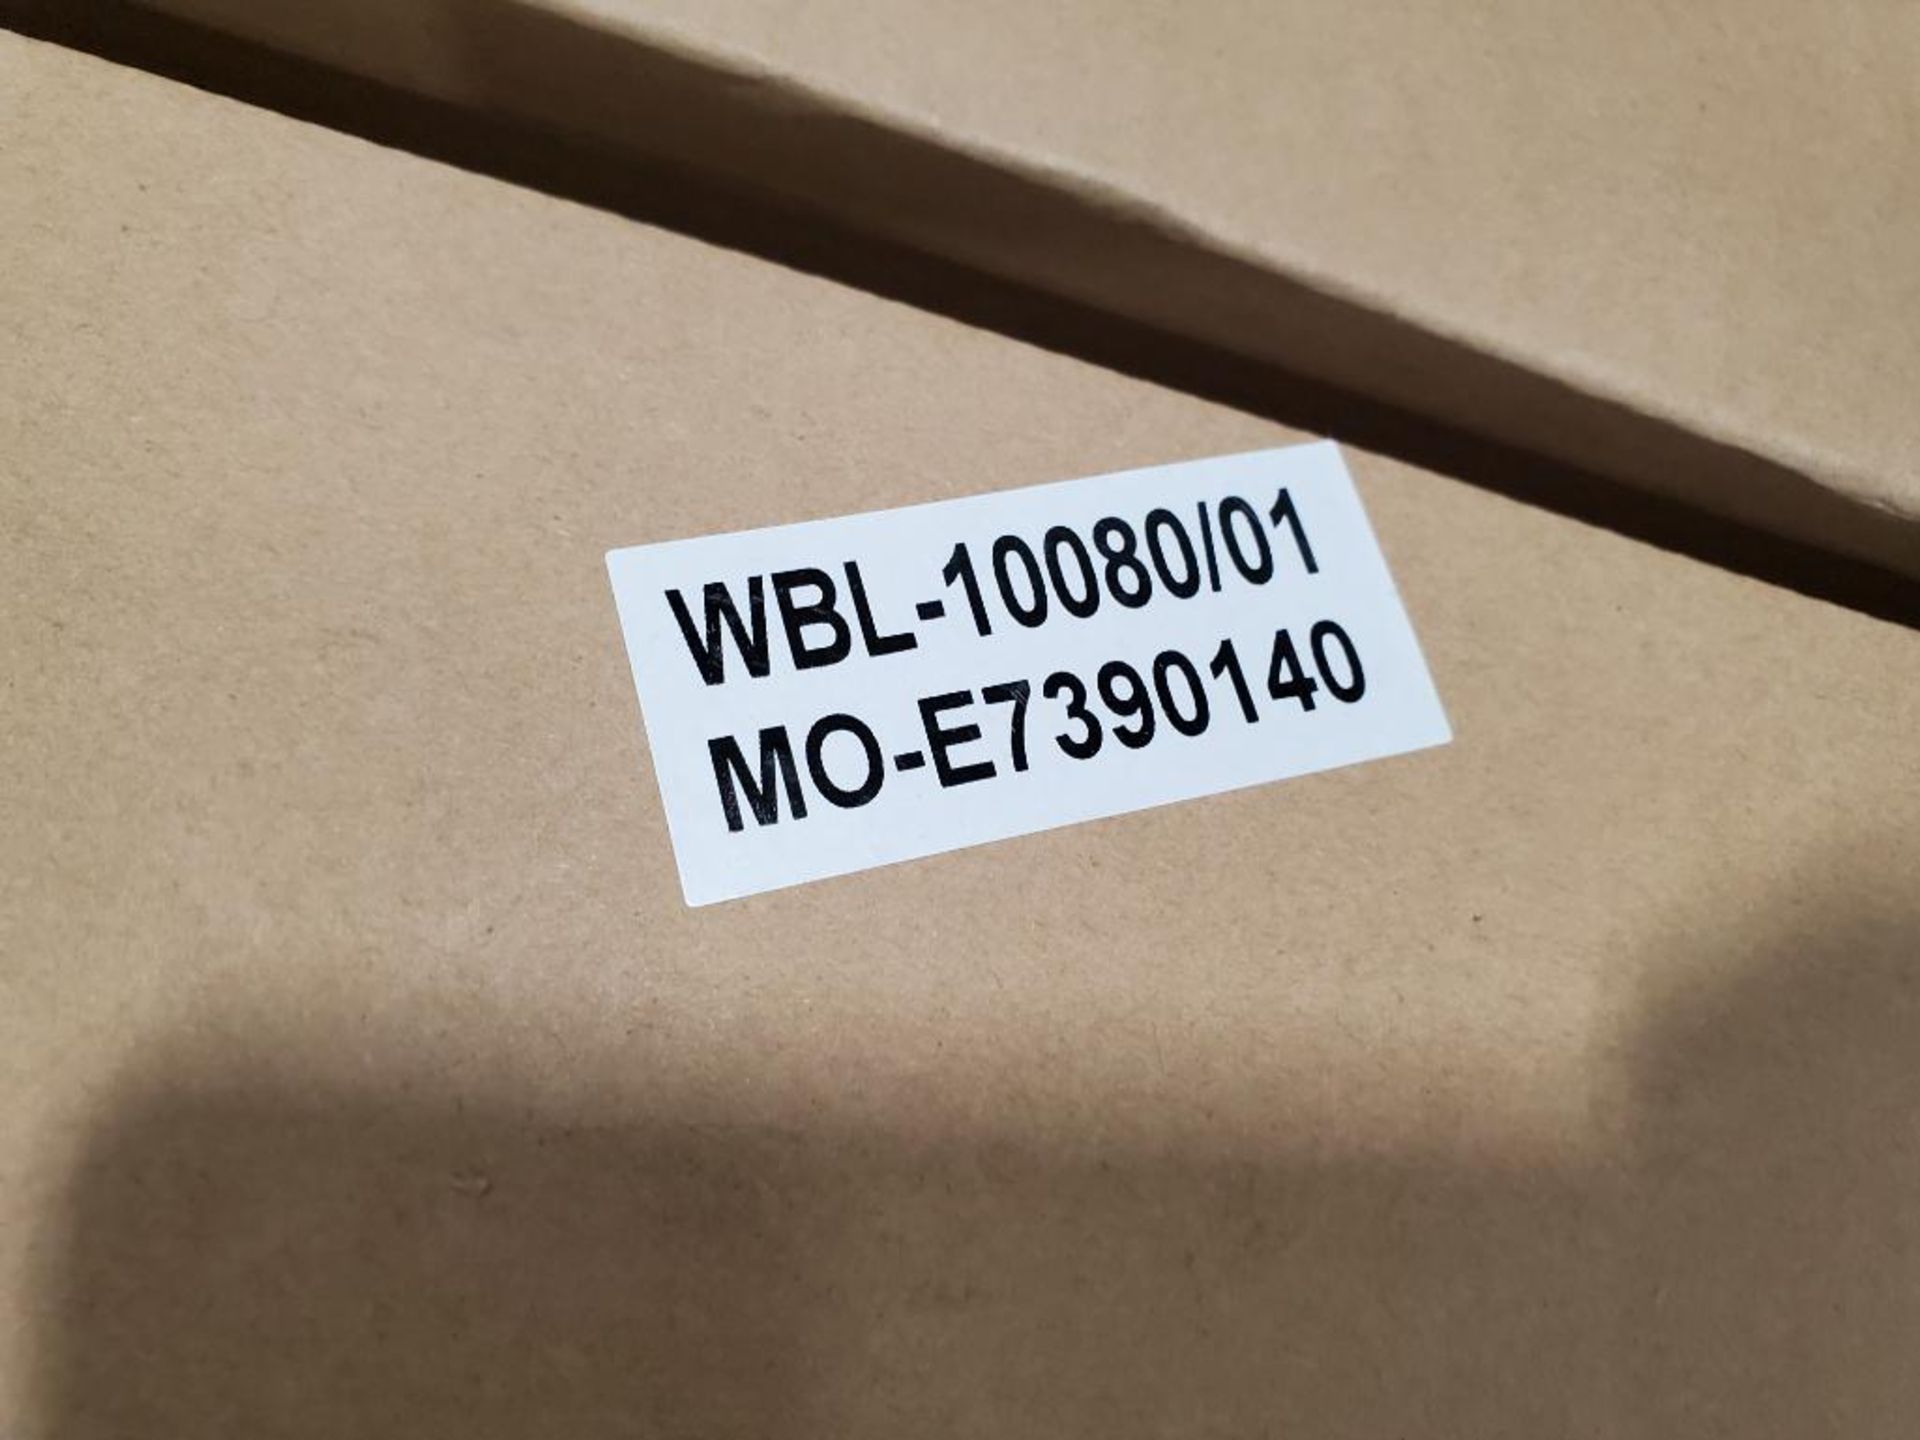 Qty 7 - Microwave trim kit. Part number WBL-10080/01. - Image 3 of 3